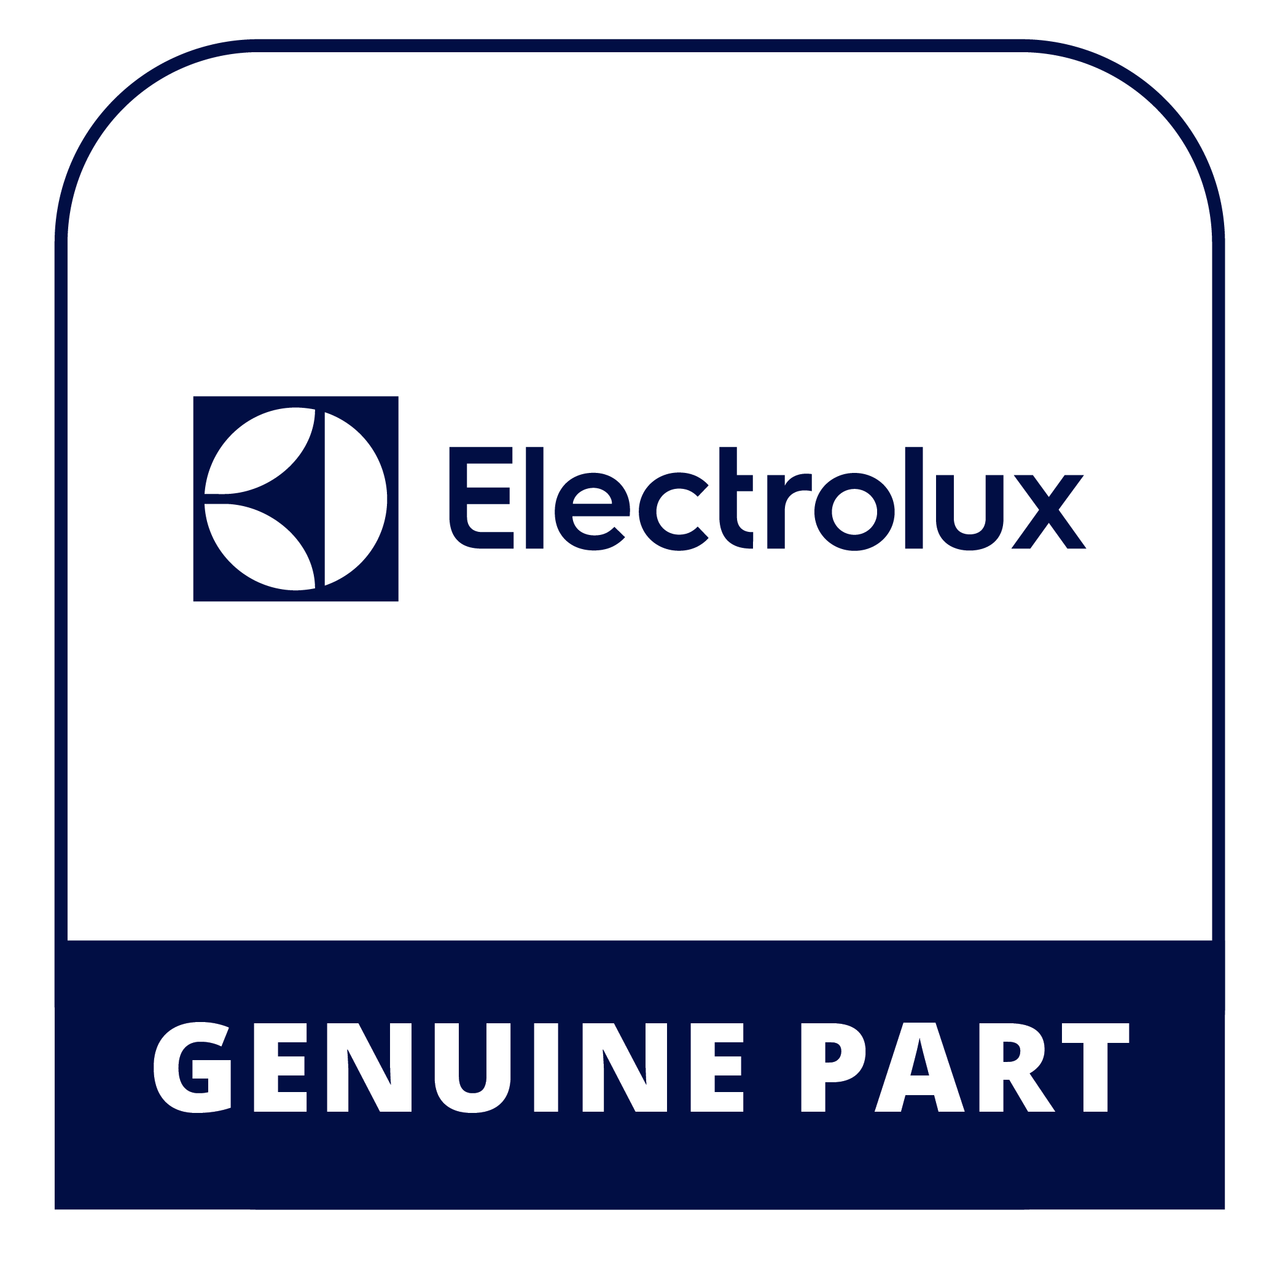 Frigidaire - Electrolux 131883301 Panel - Genuine Electrolux Part